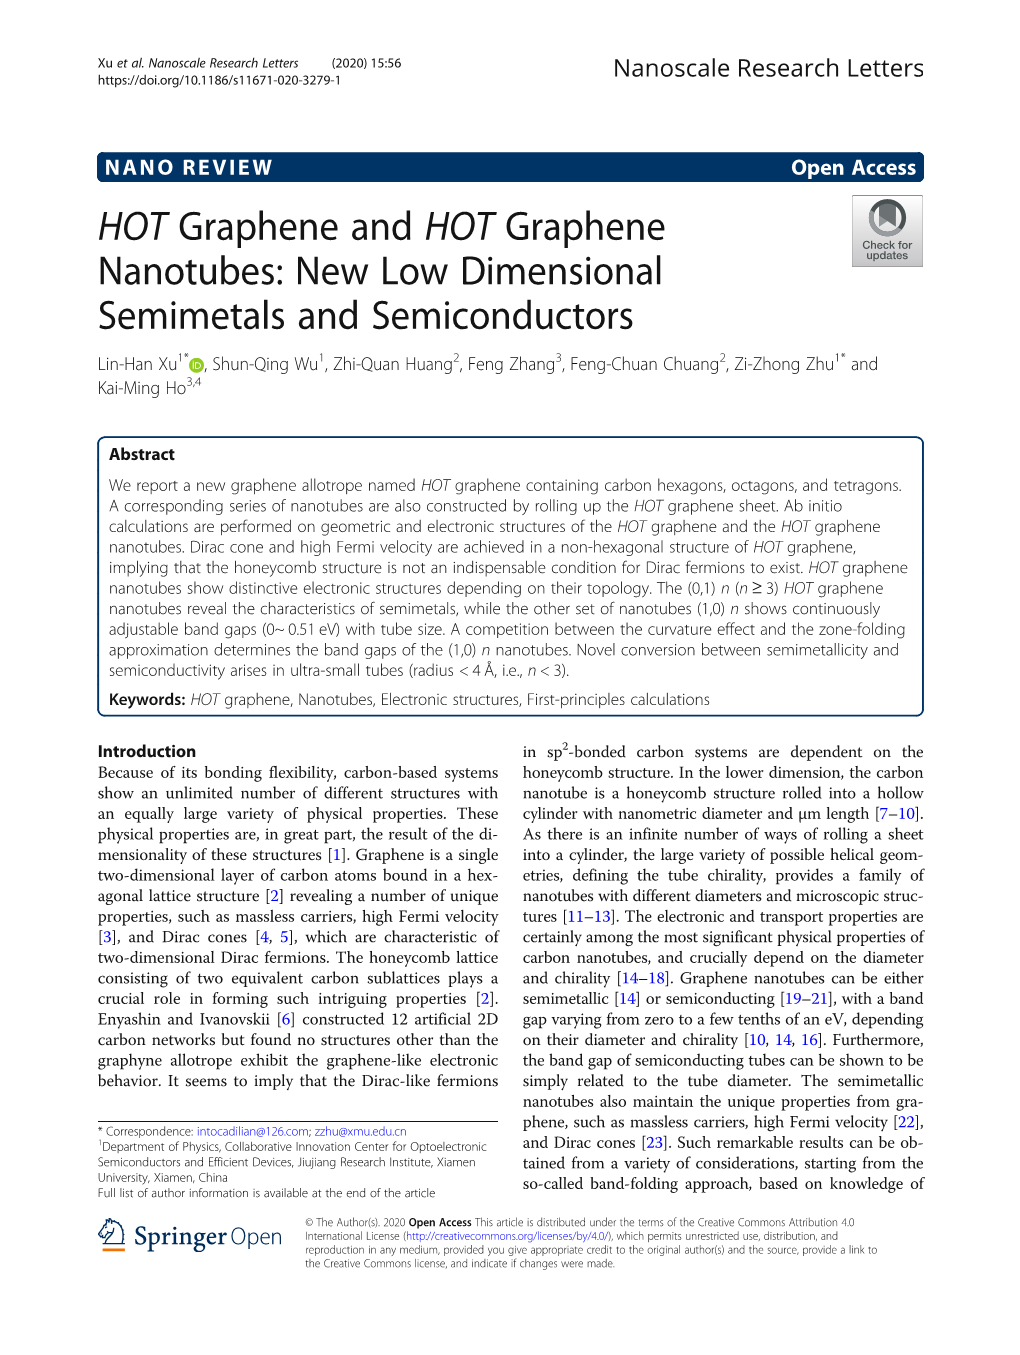 HOT Graphene and HOT Graphene Nanotubes